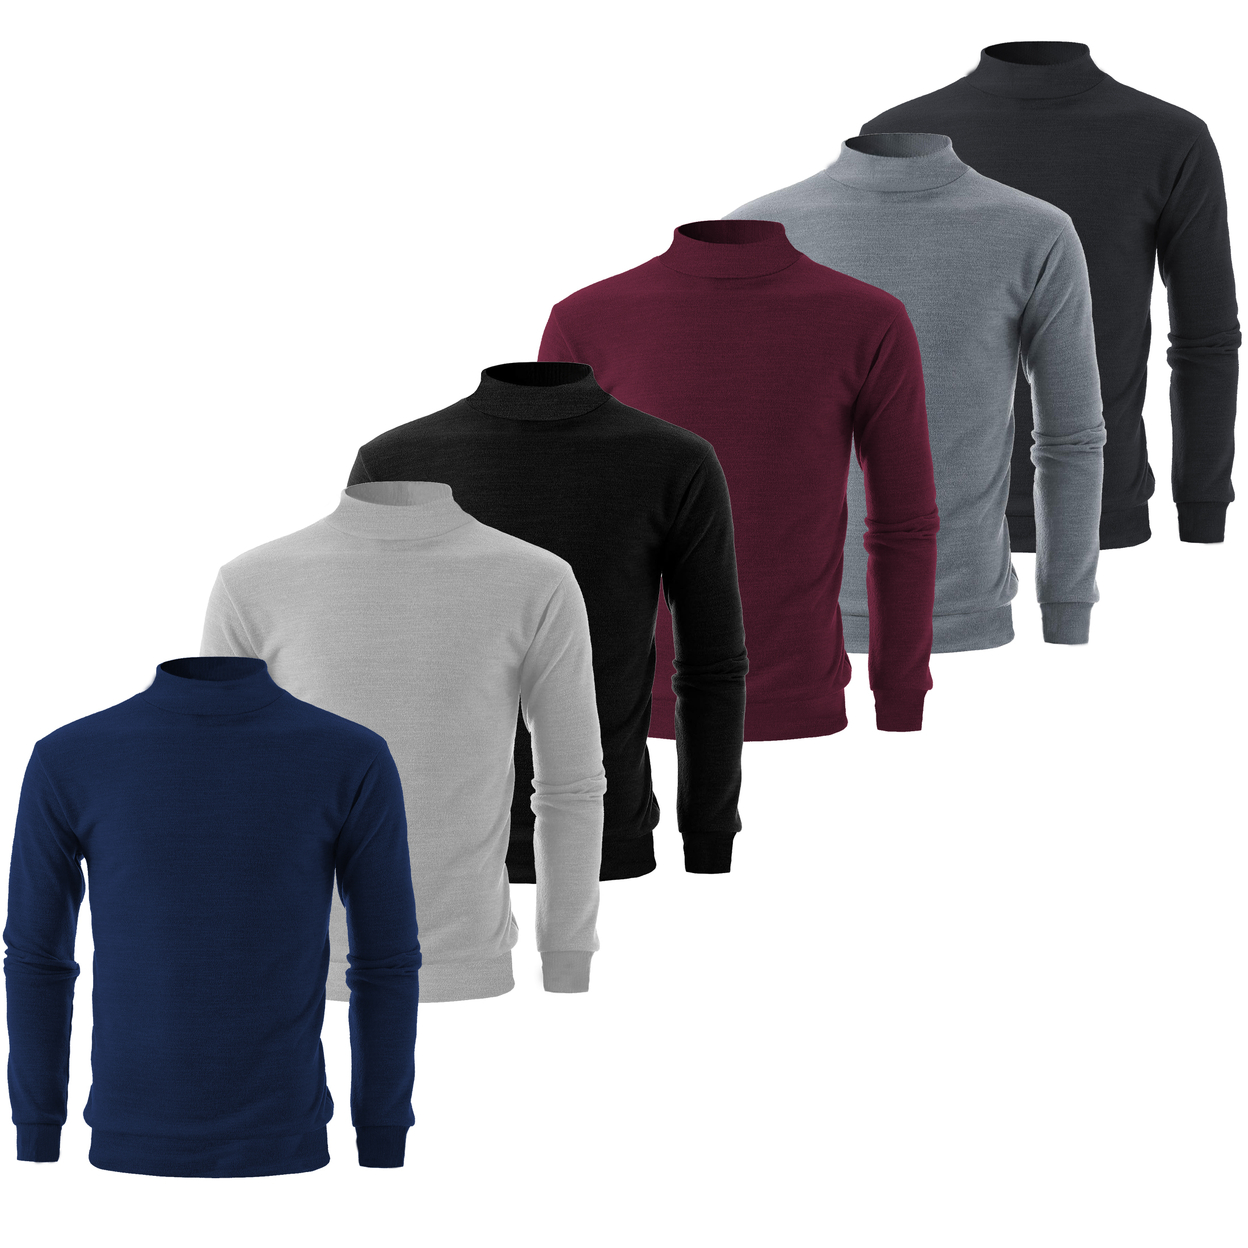 Multi-Pack: Men's Winter Warm Cozy Knit Slim Fit Mock Neck Sweater - 2-pack, Large